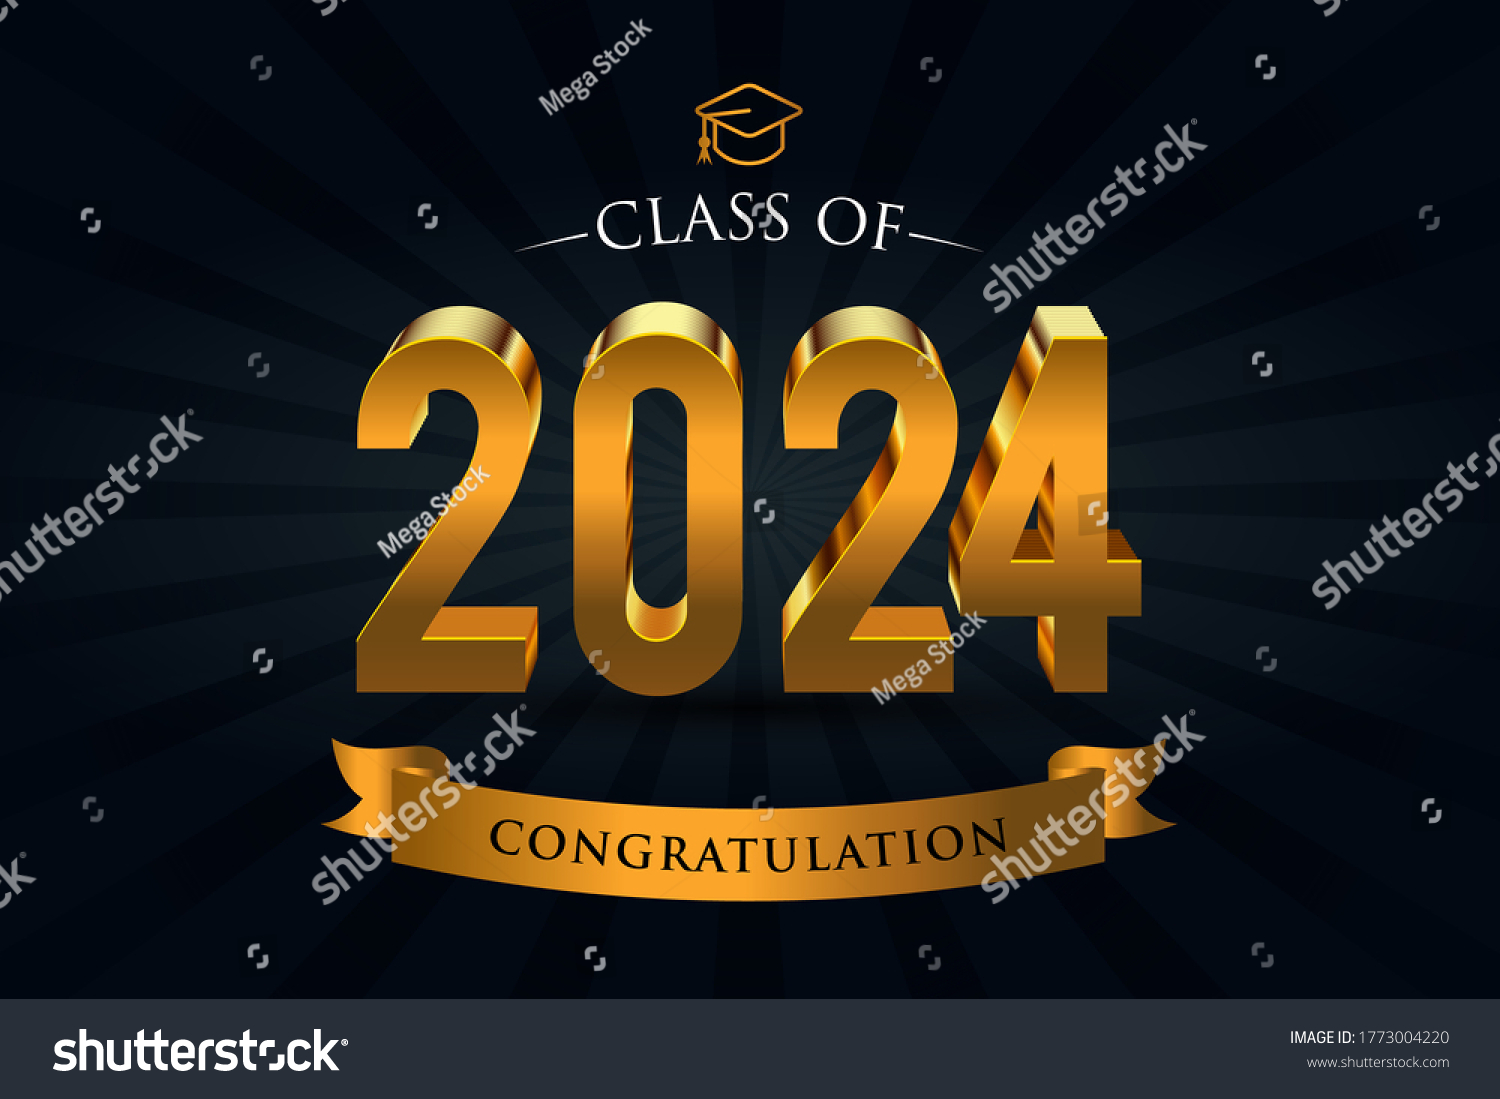 Class of 2024. Congrats Graduates. 3d lettering - Royalty Free Stock ...